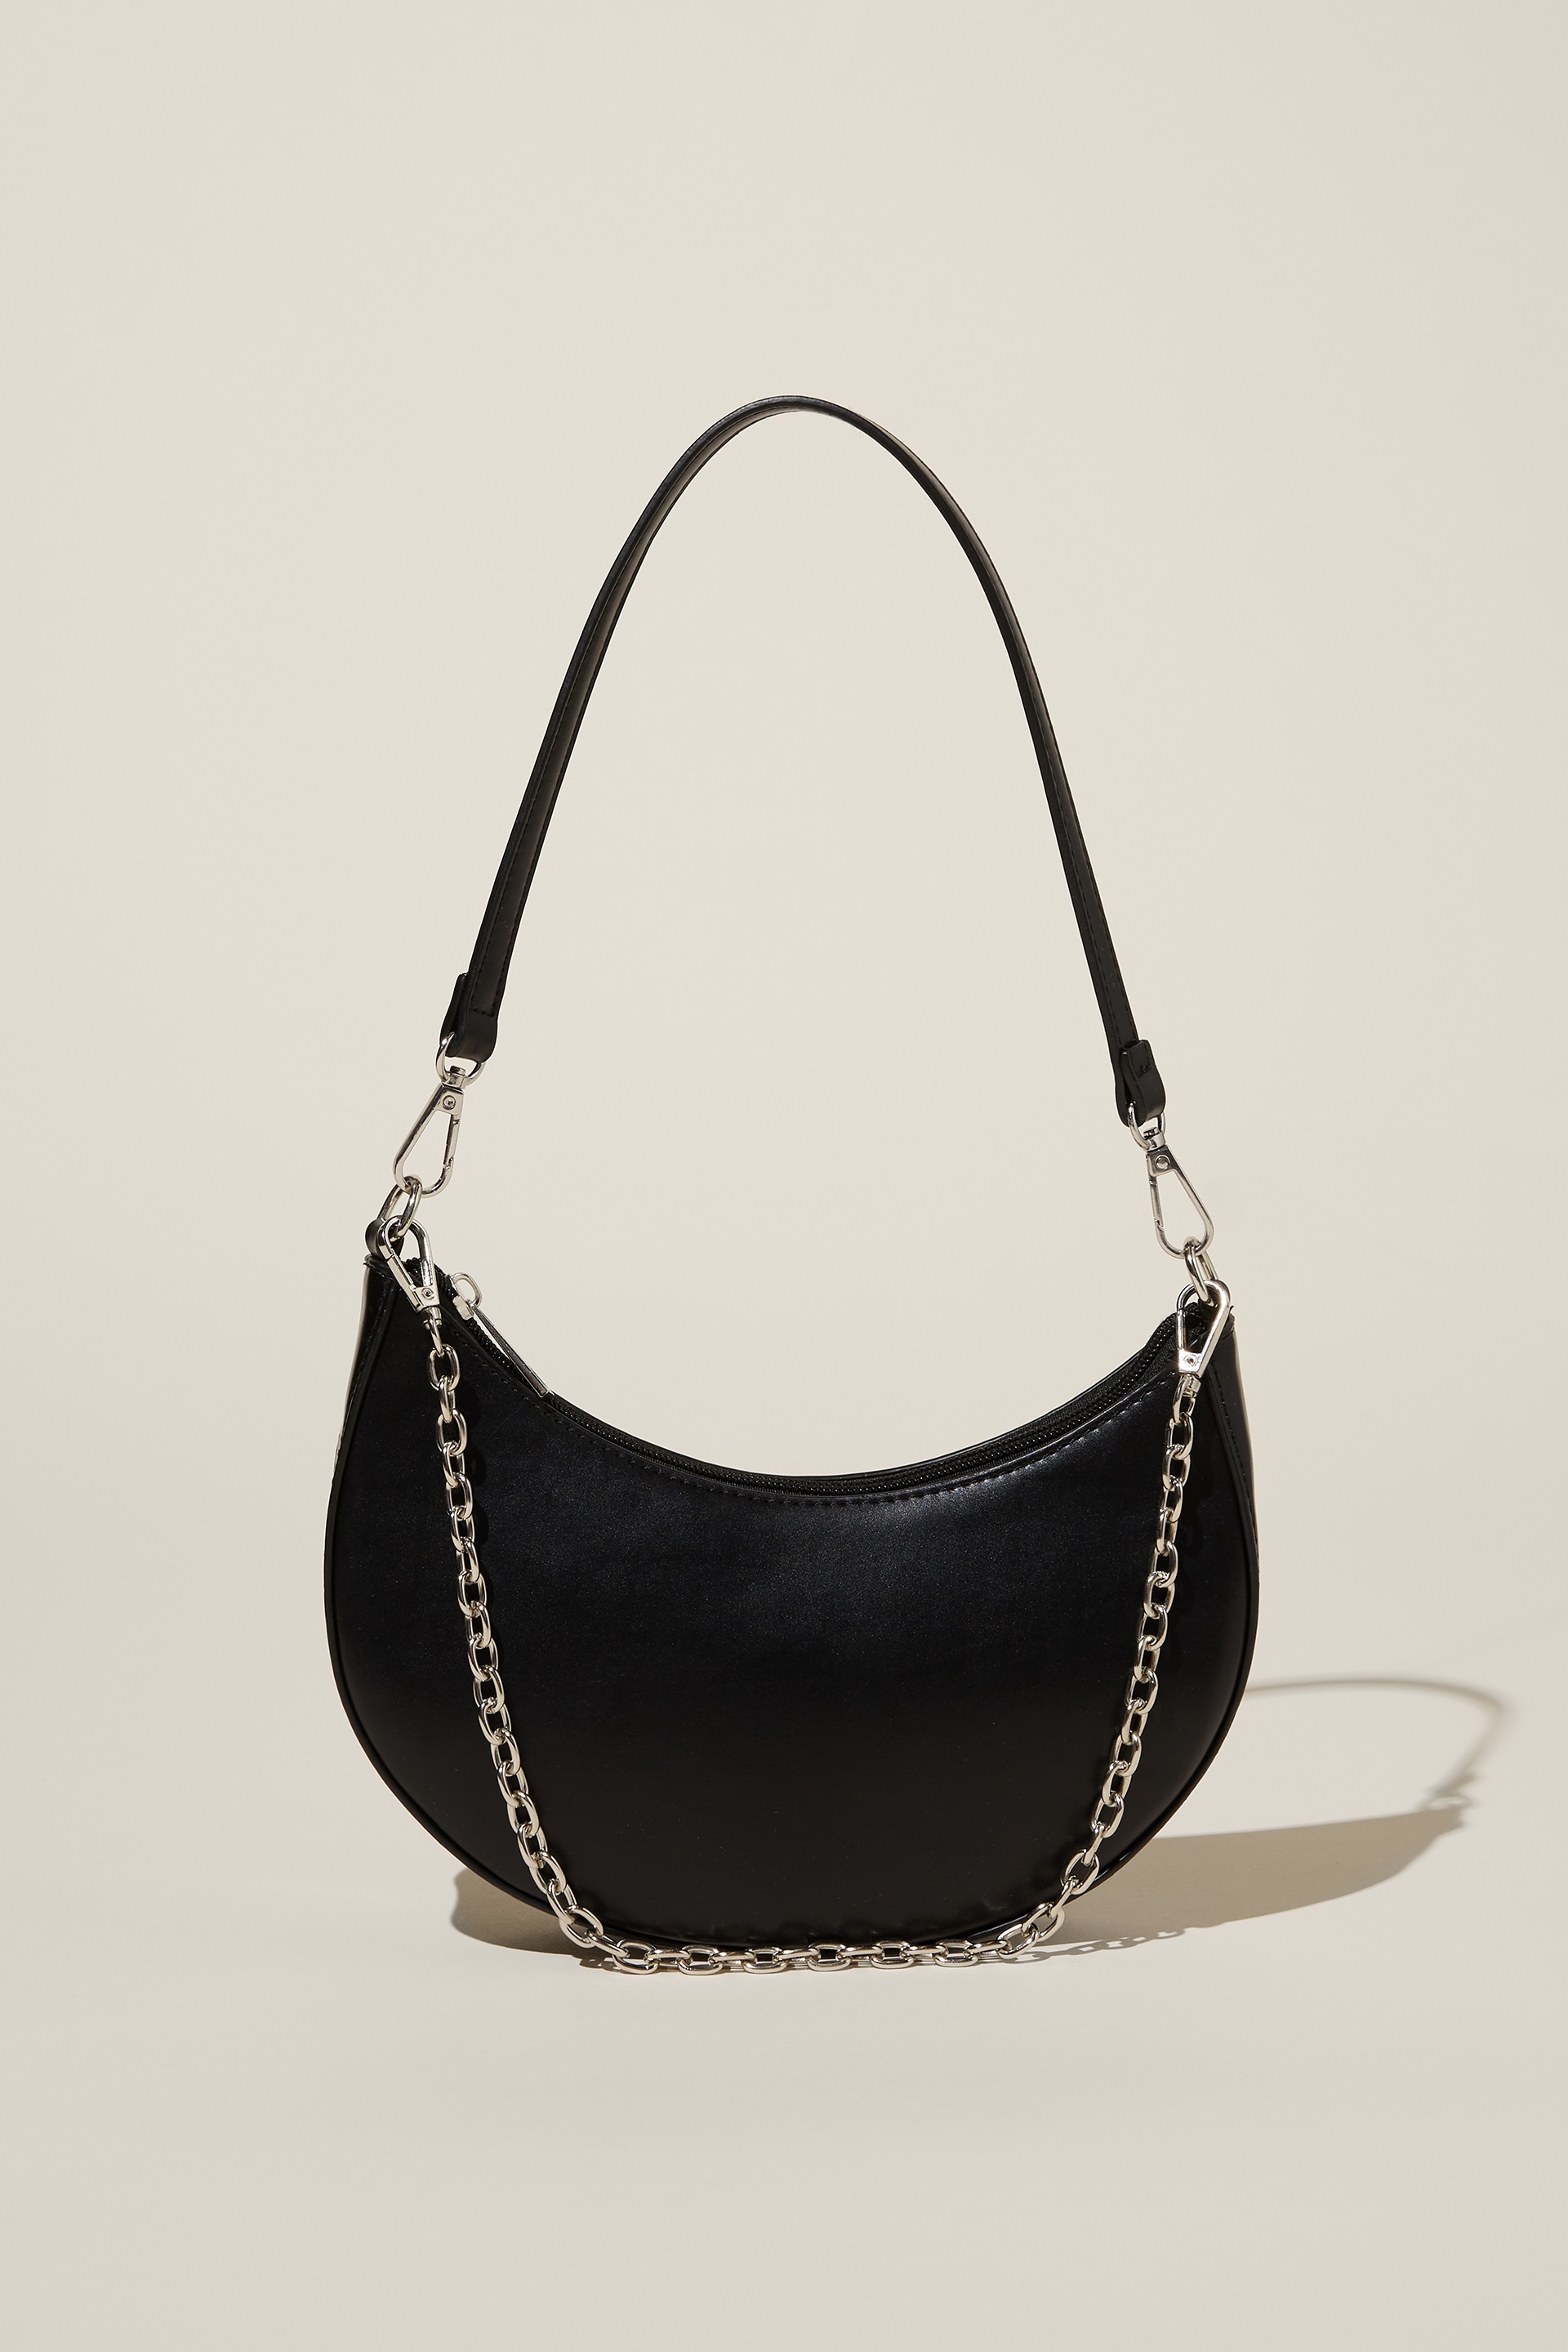 Rubi - Sadie Multi Strap Shoulder Bag - Black smooth